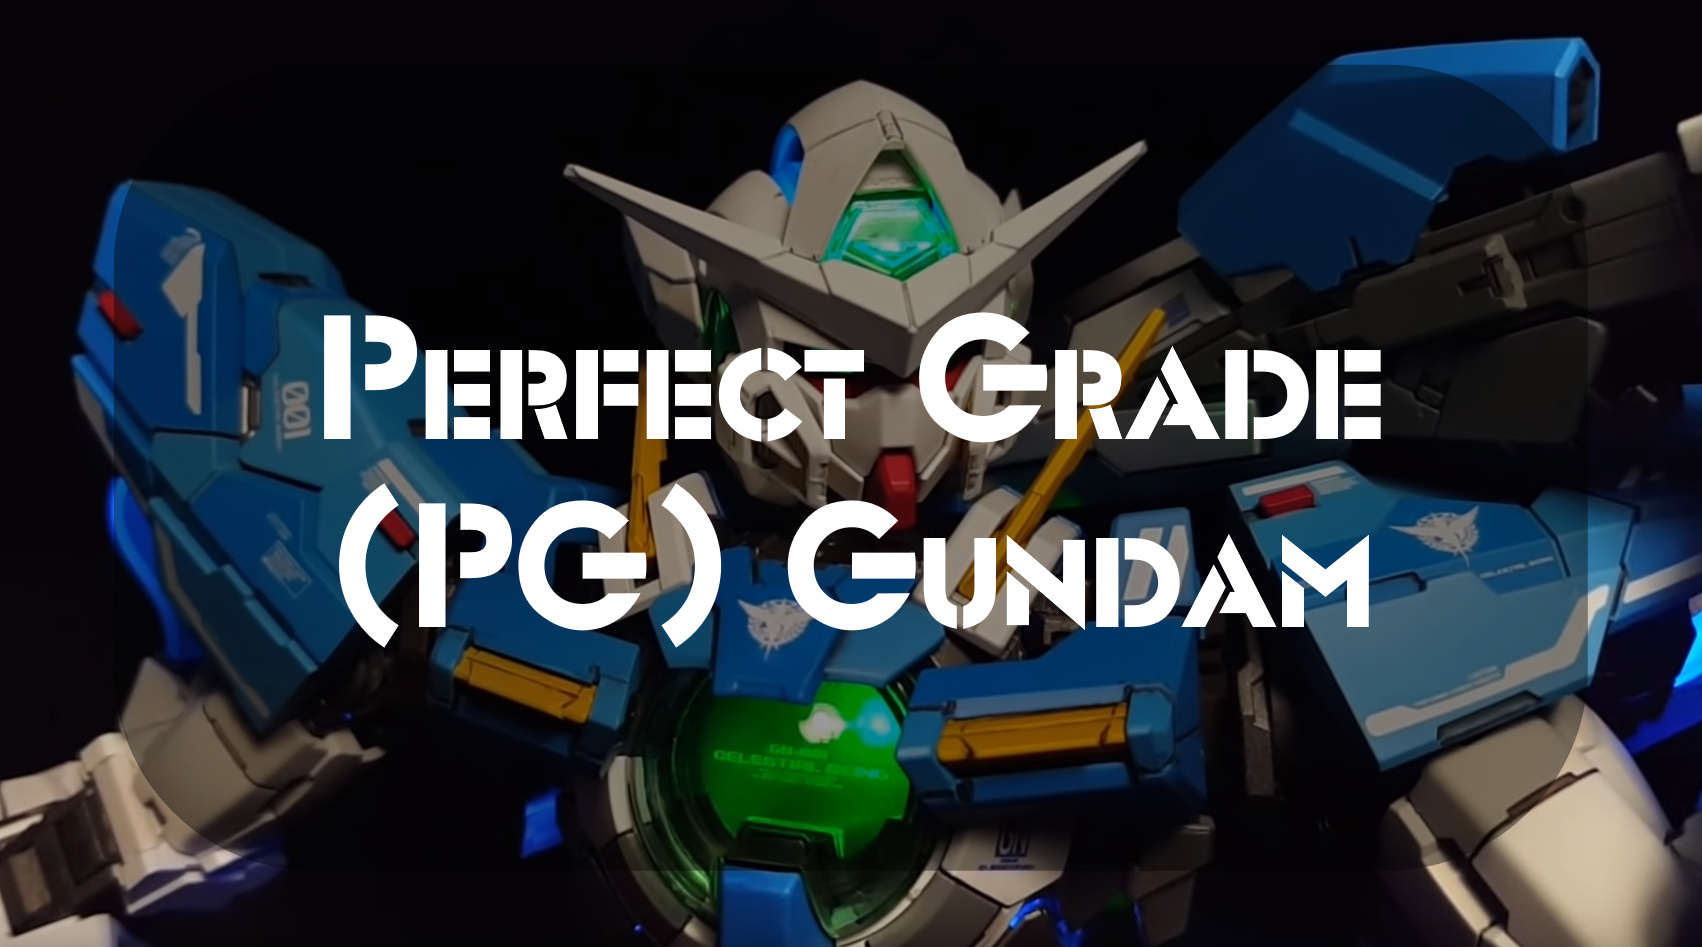 Perfect Grade (PG) Gundam